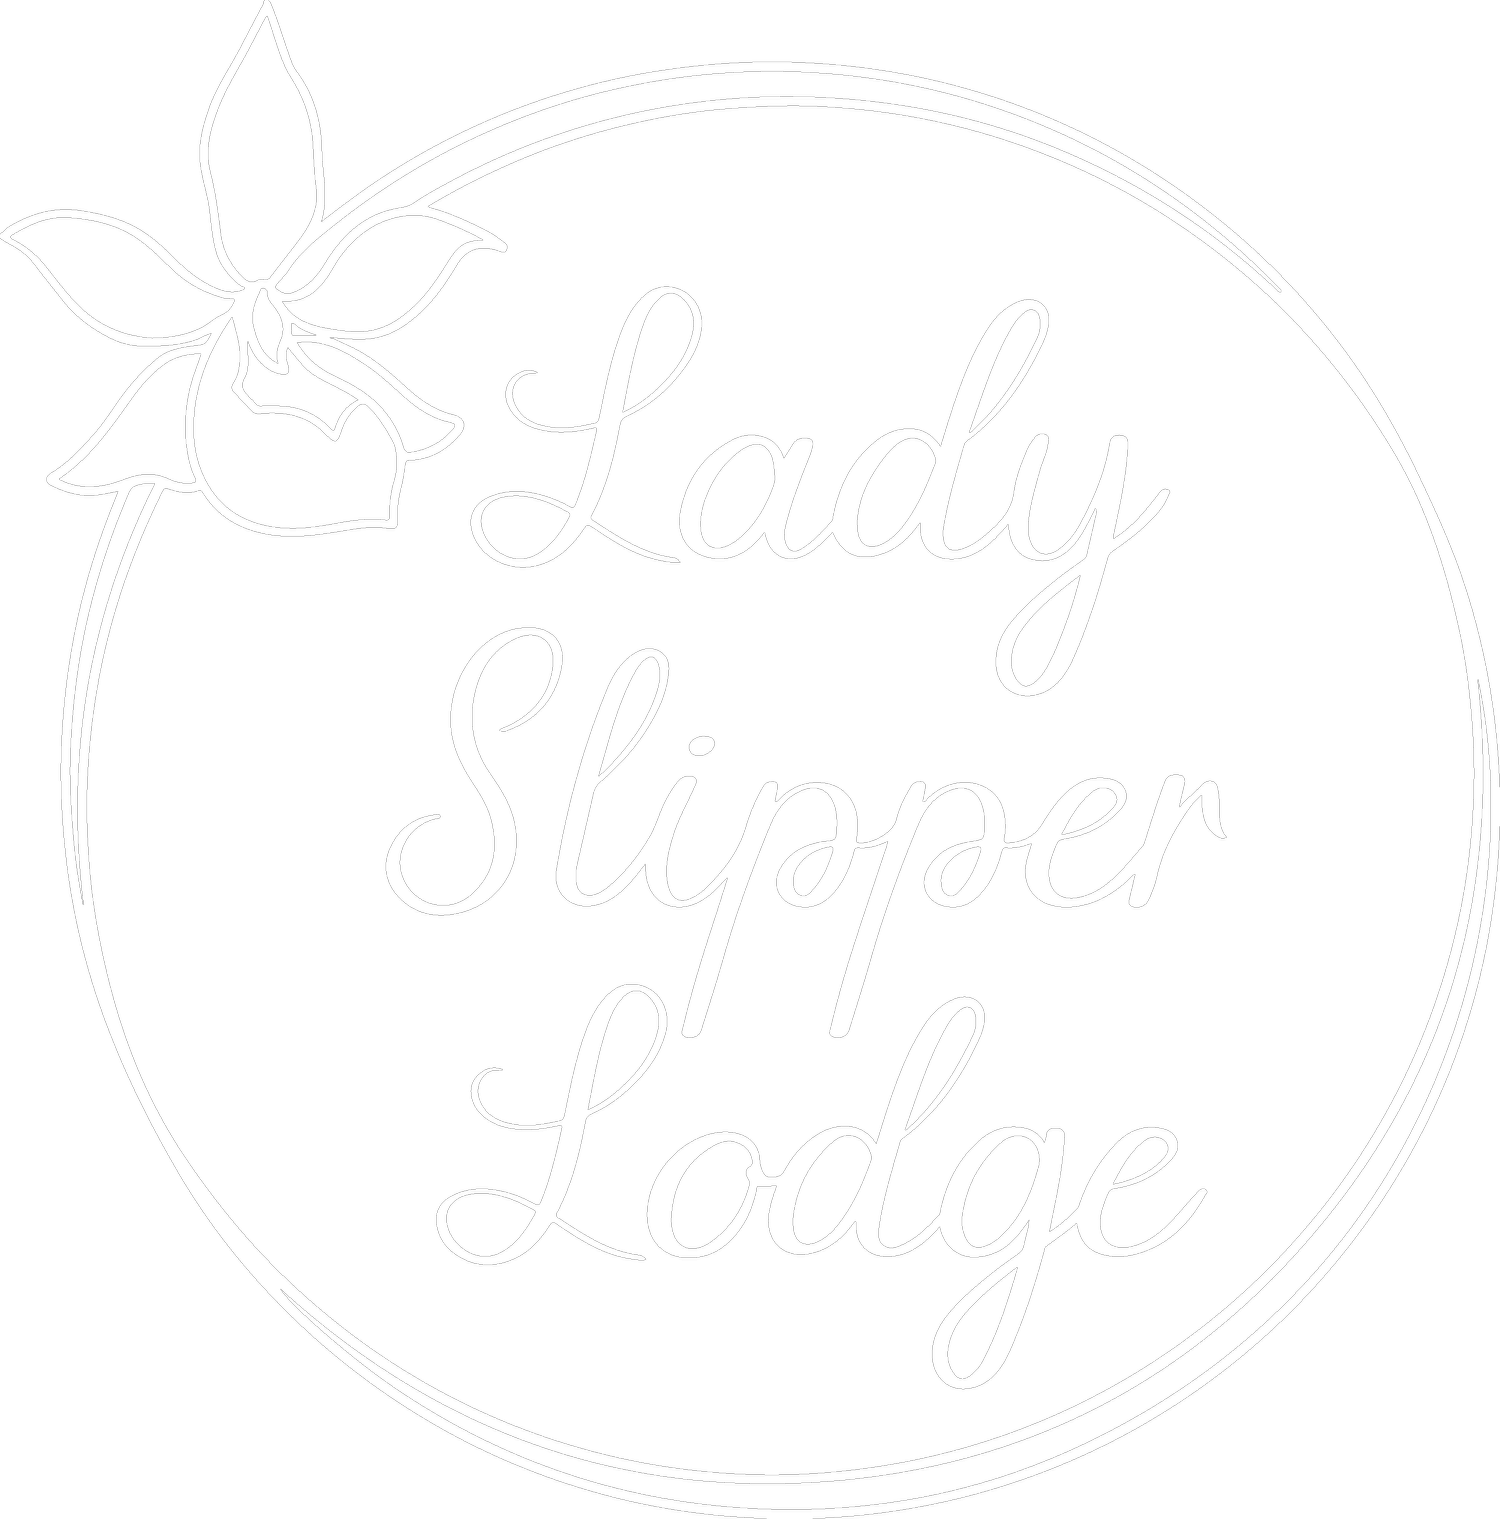 Lady Slipper Lodge